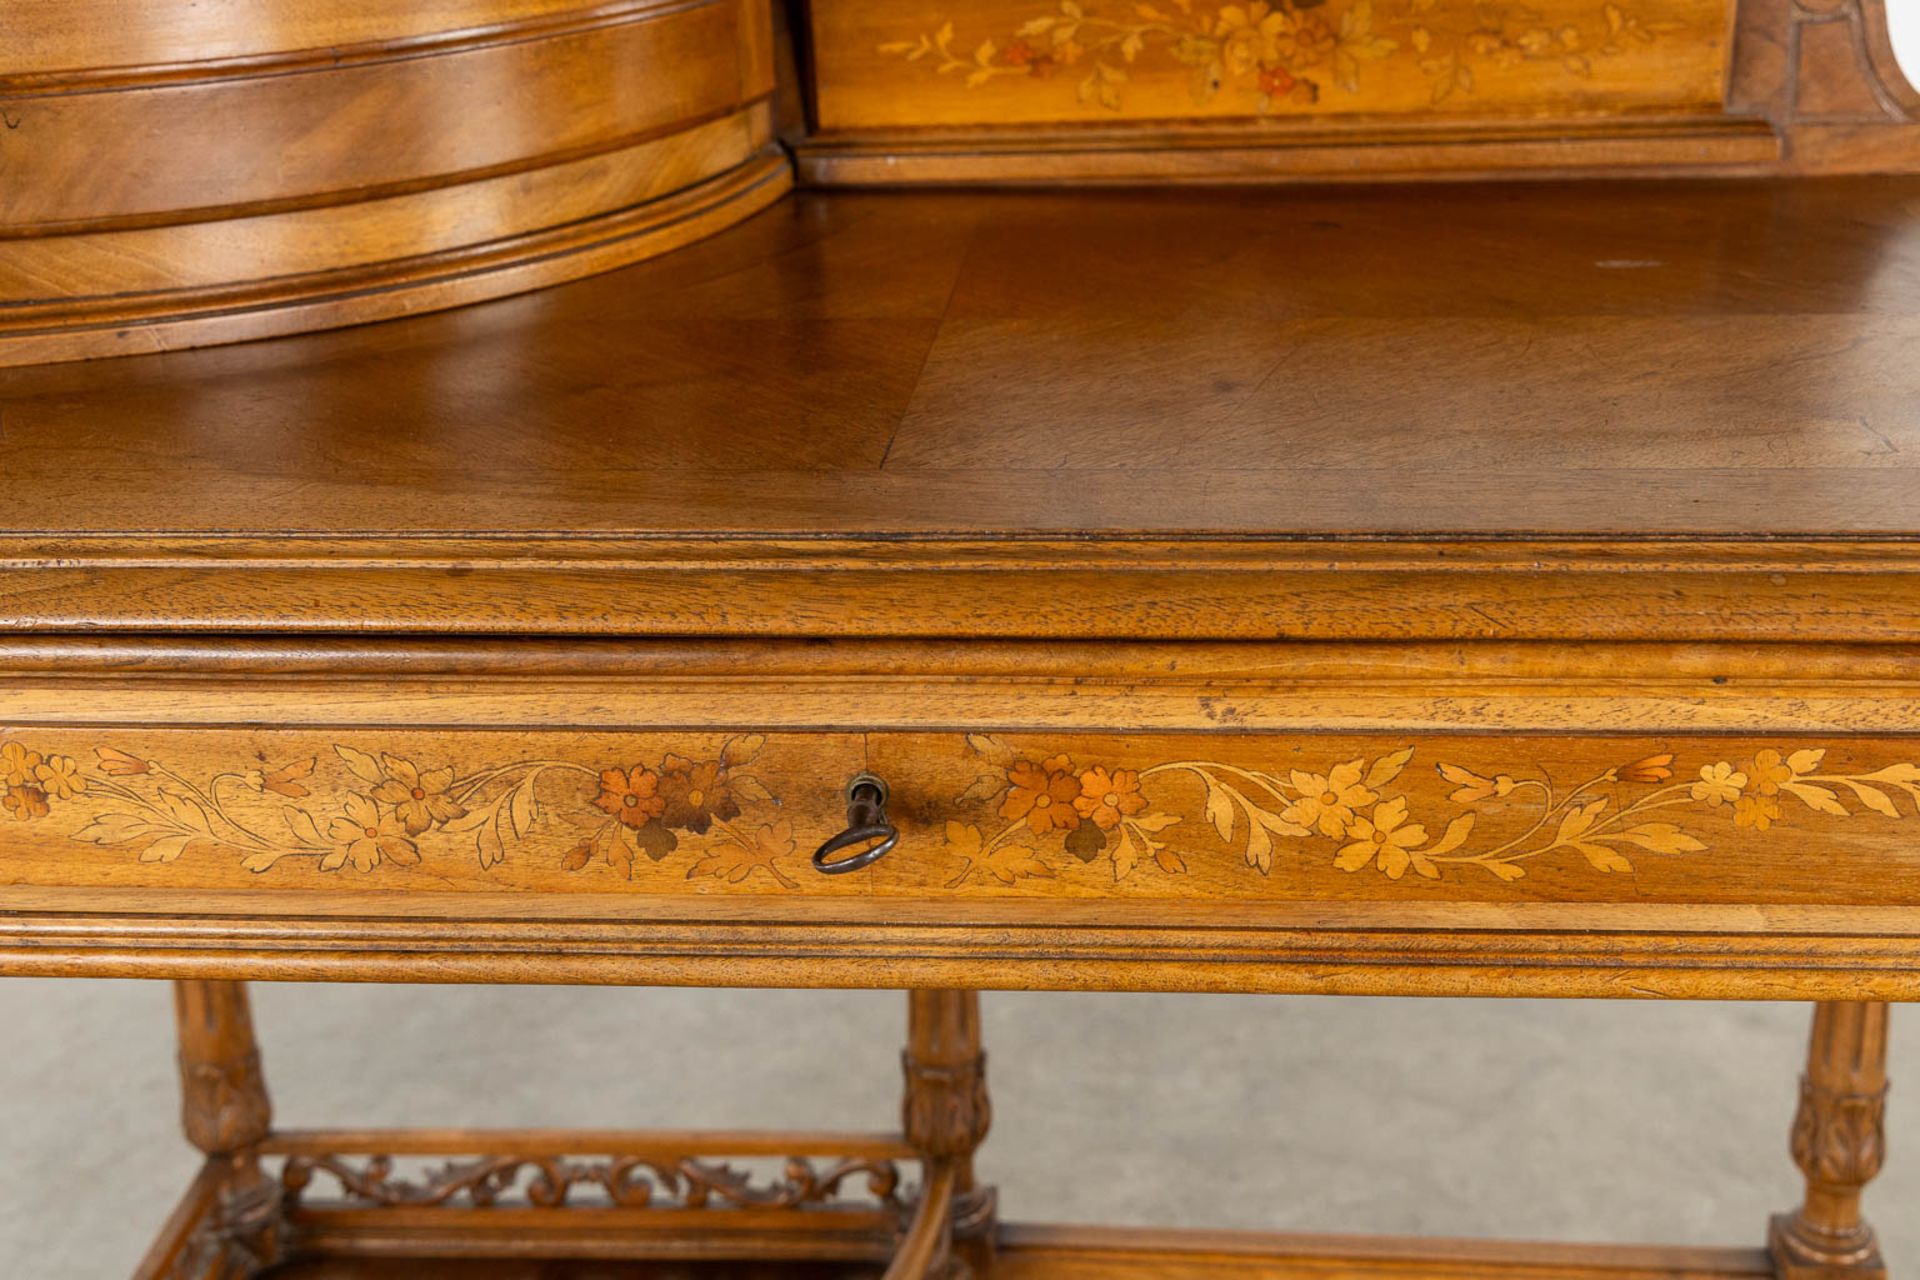 An elegant ladies' desk, walnut with marquetry inlay. 19th C. (L:50 x W:88 x H:120 cm) - Image 11 of 12